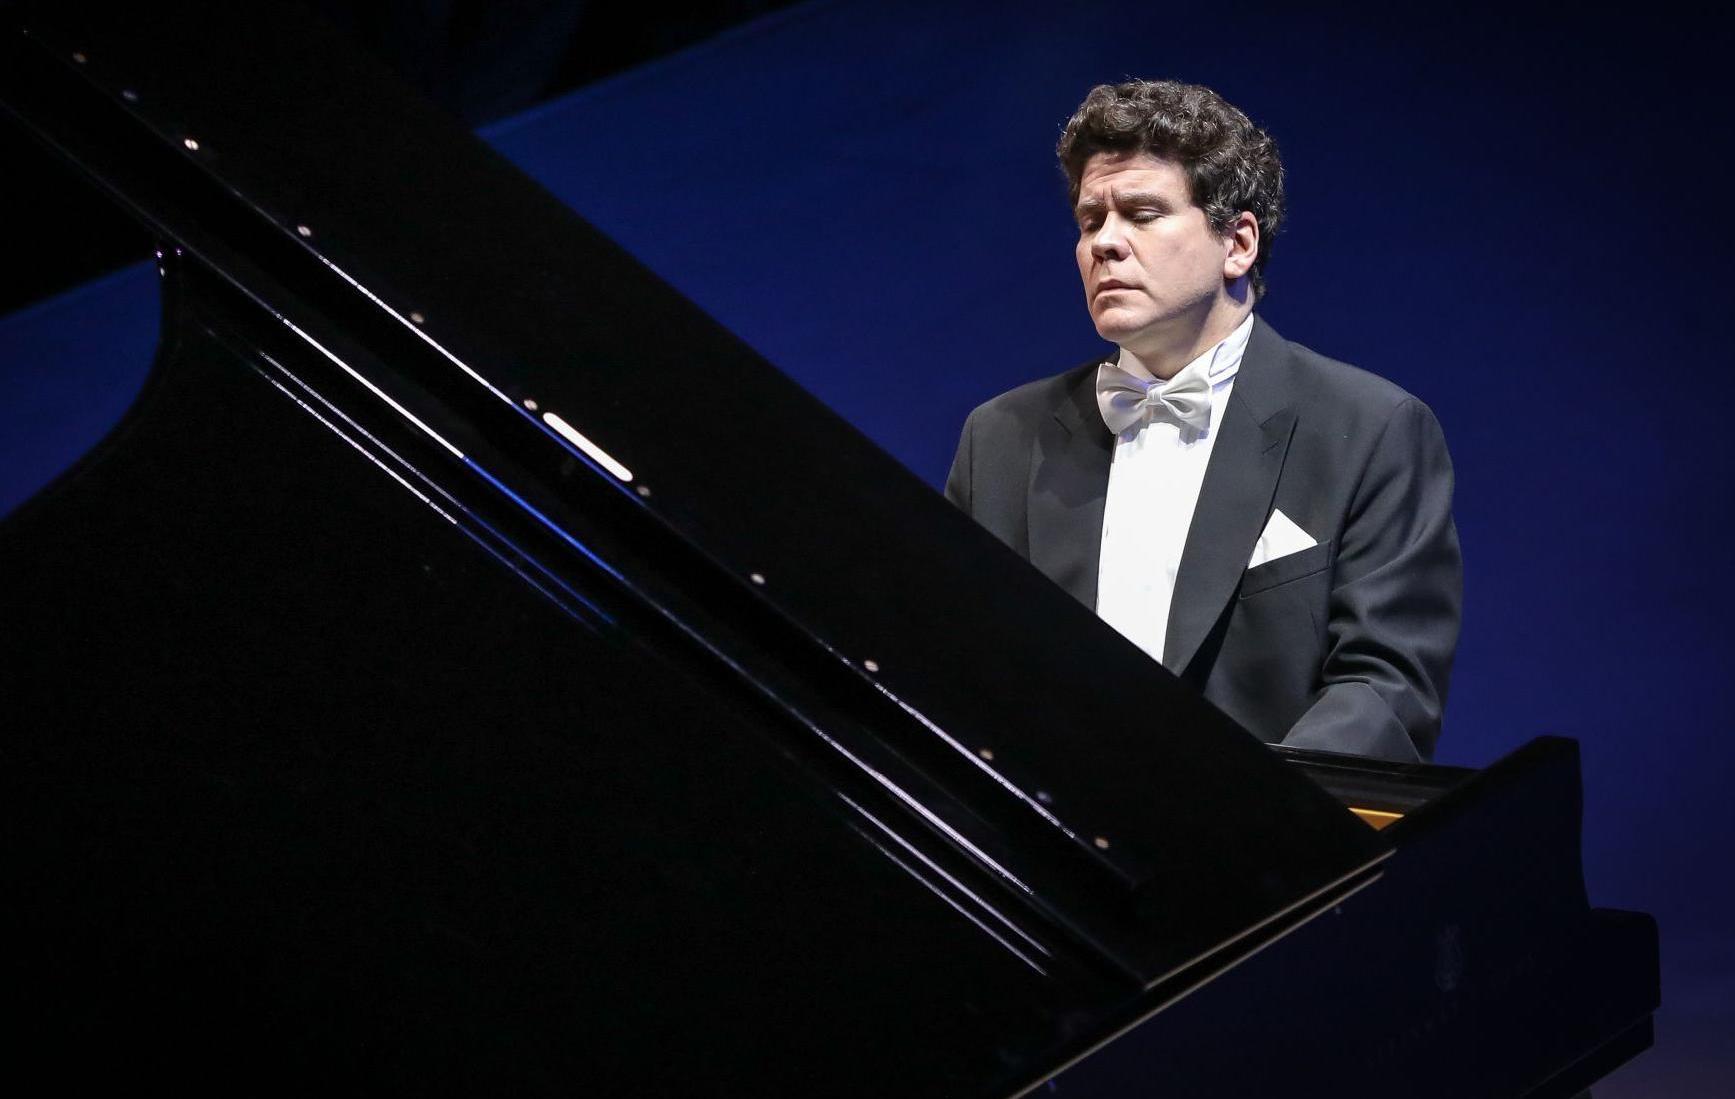 Denis Matsuev, piano